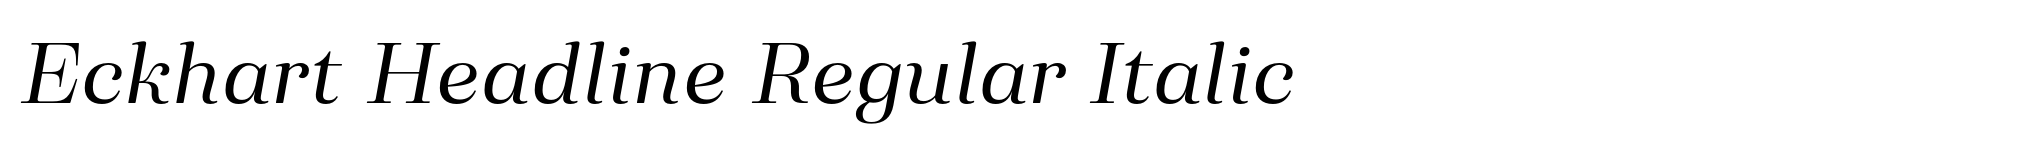 Eckhart Headline Regular Italic image